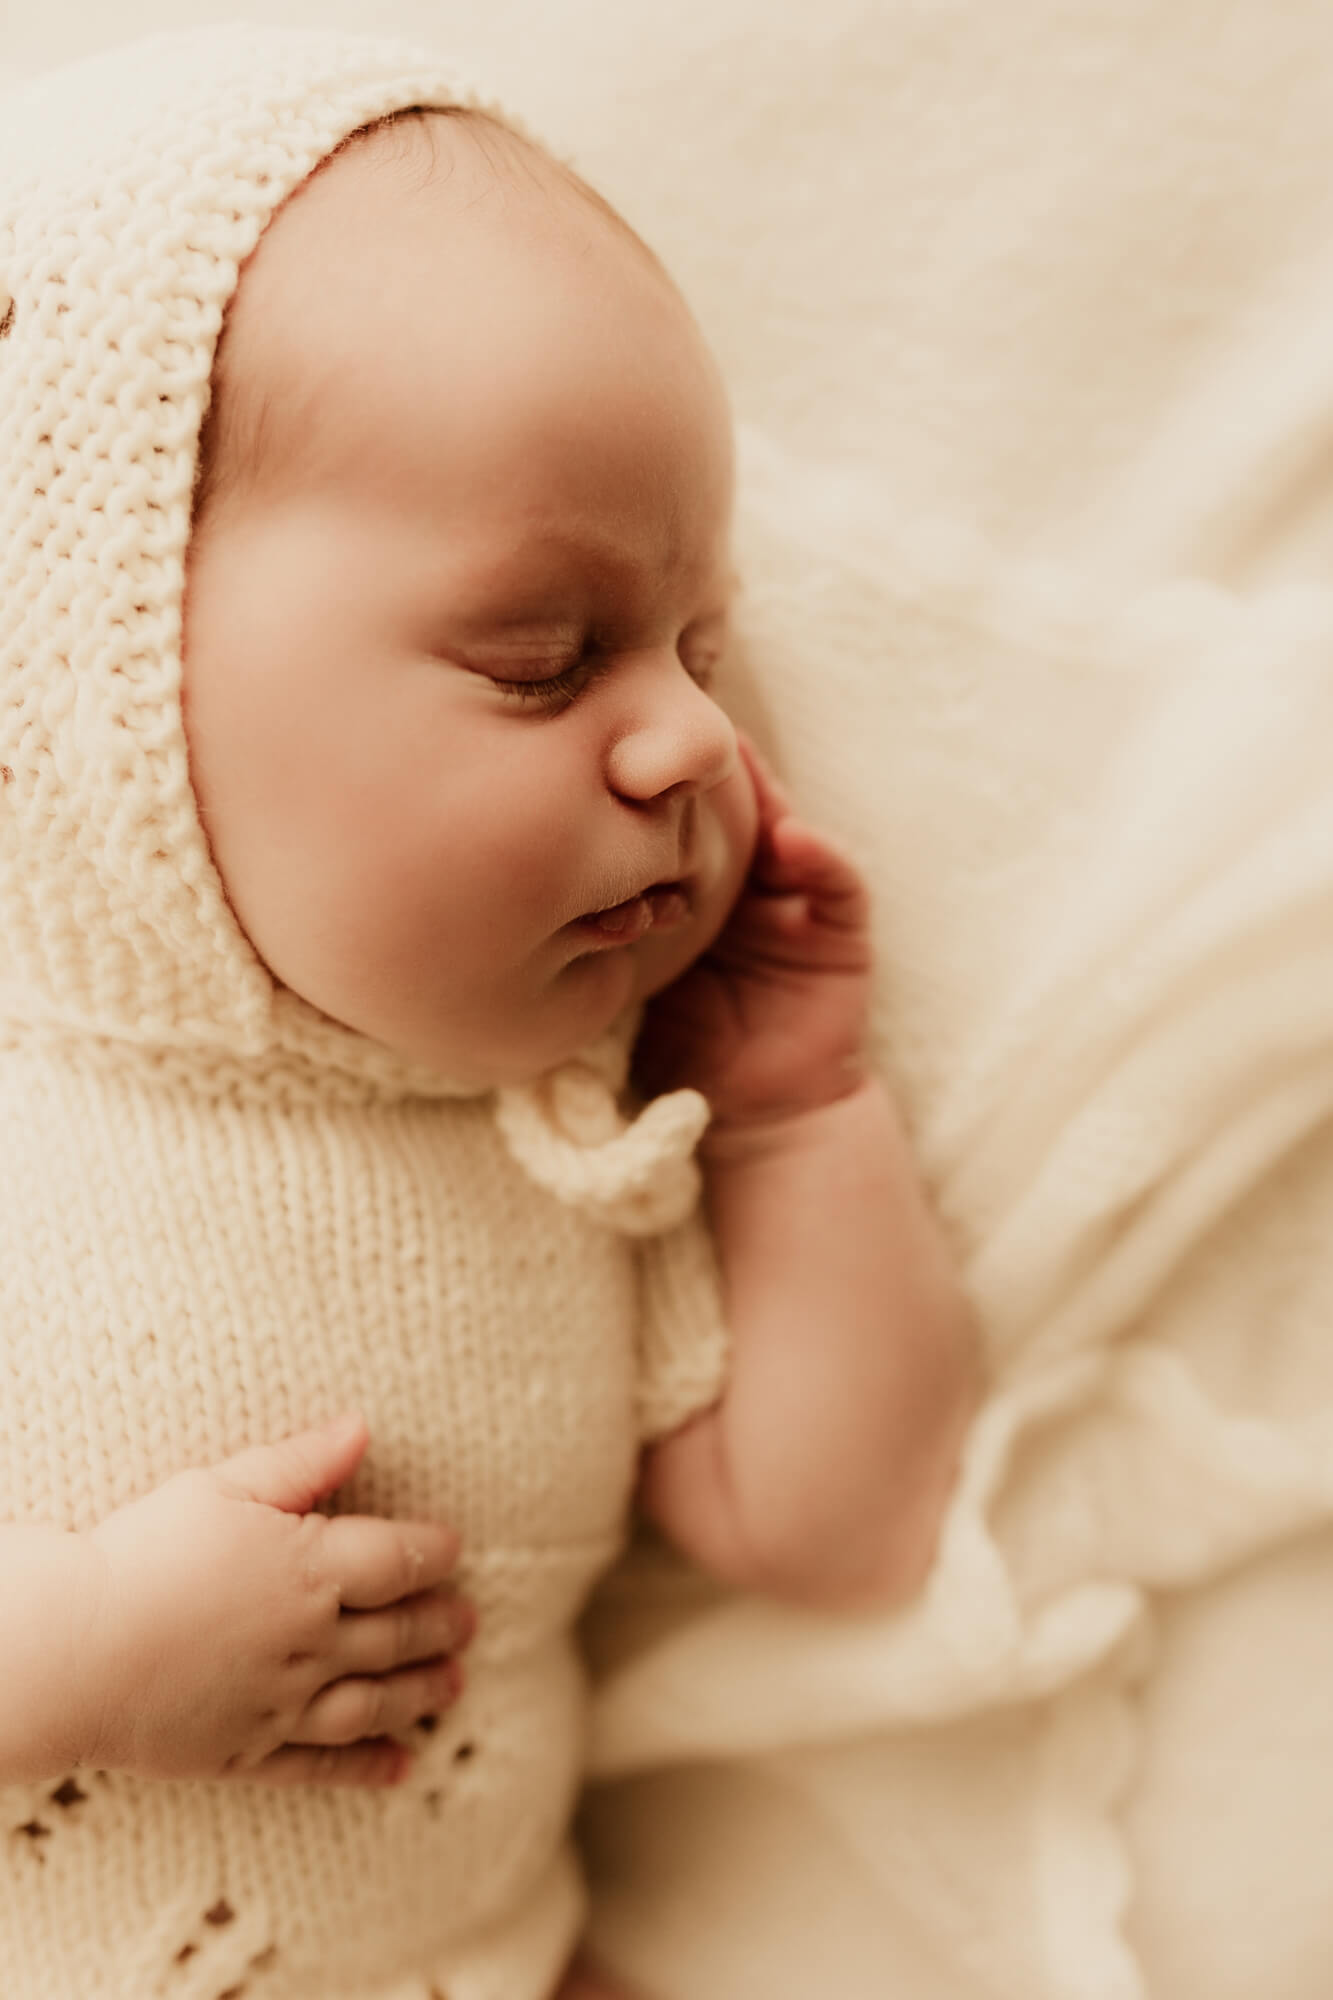 Sleeping newborn baby girl with her hand near her cheek.